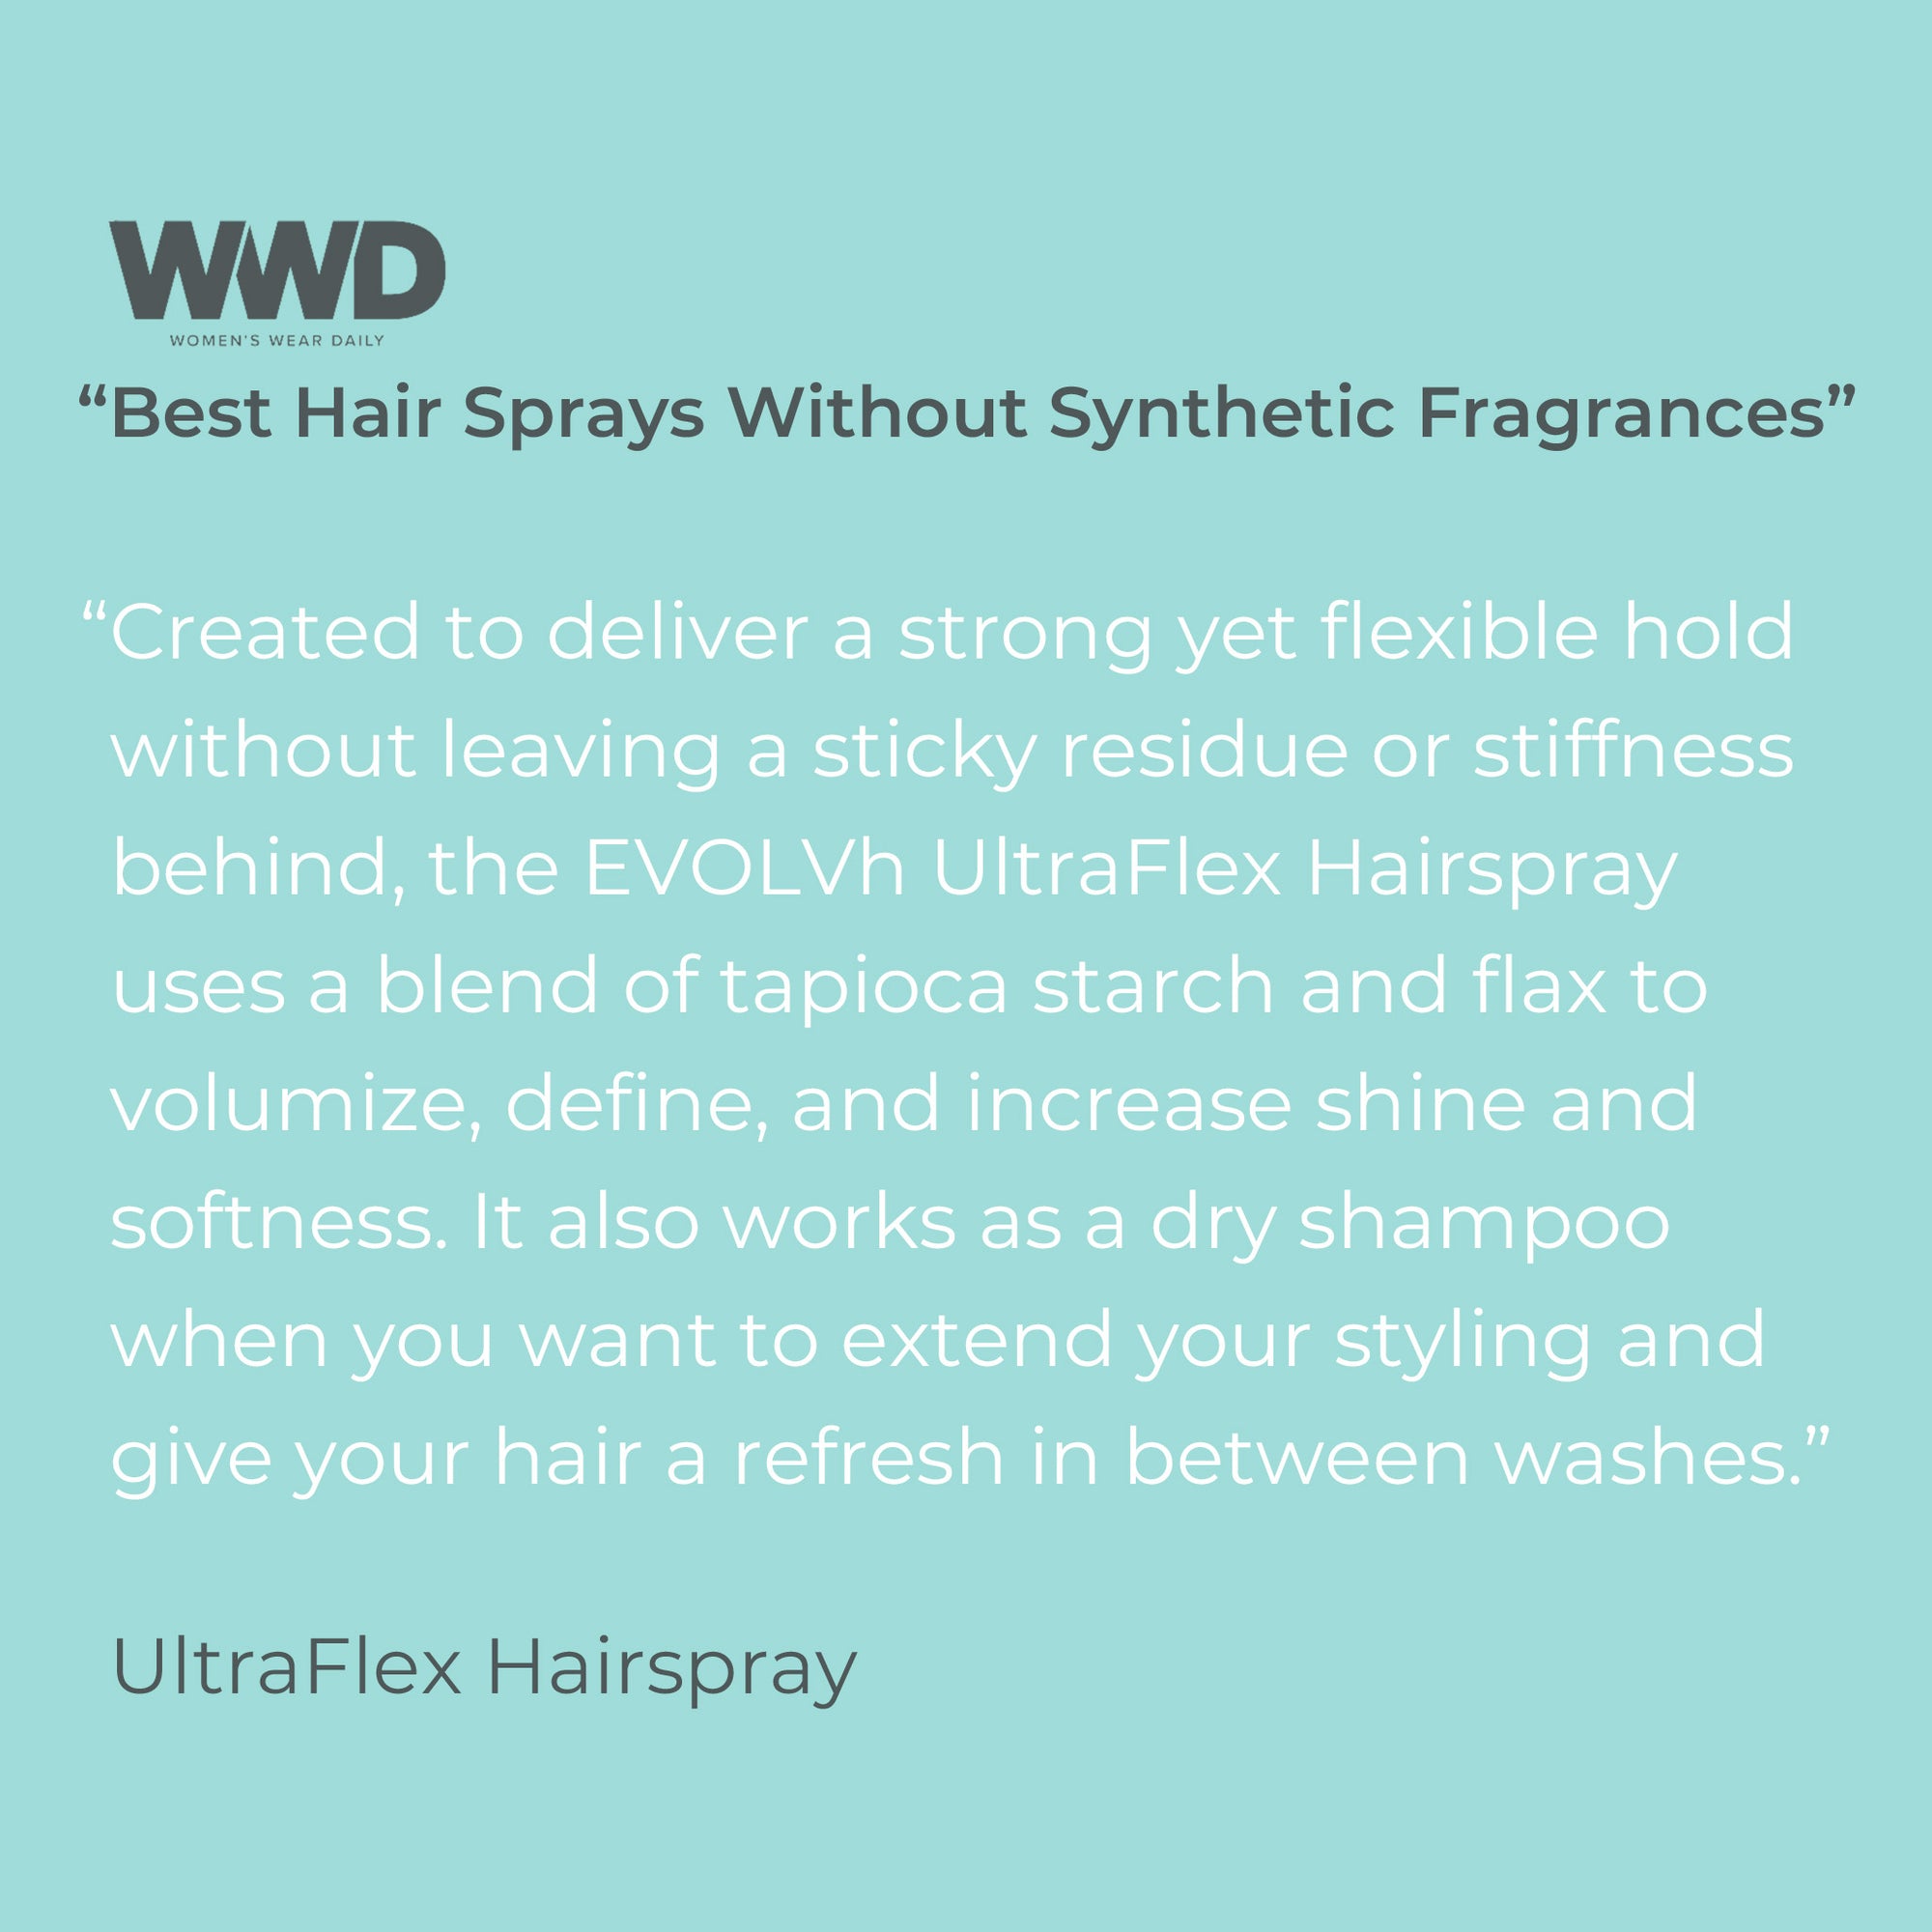 UltraFlex Hairspray